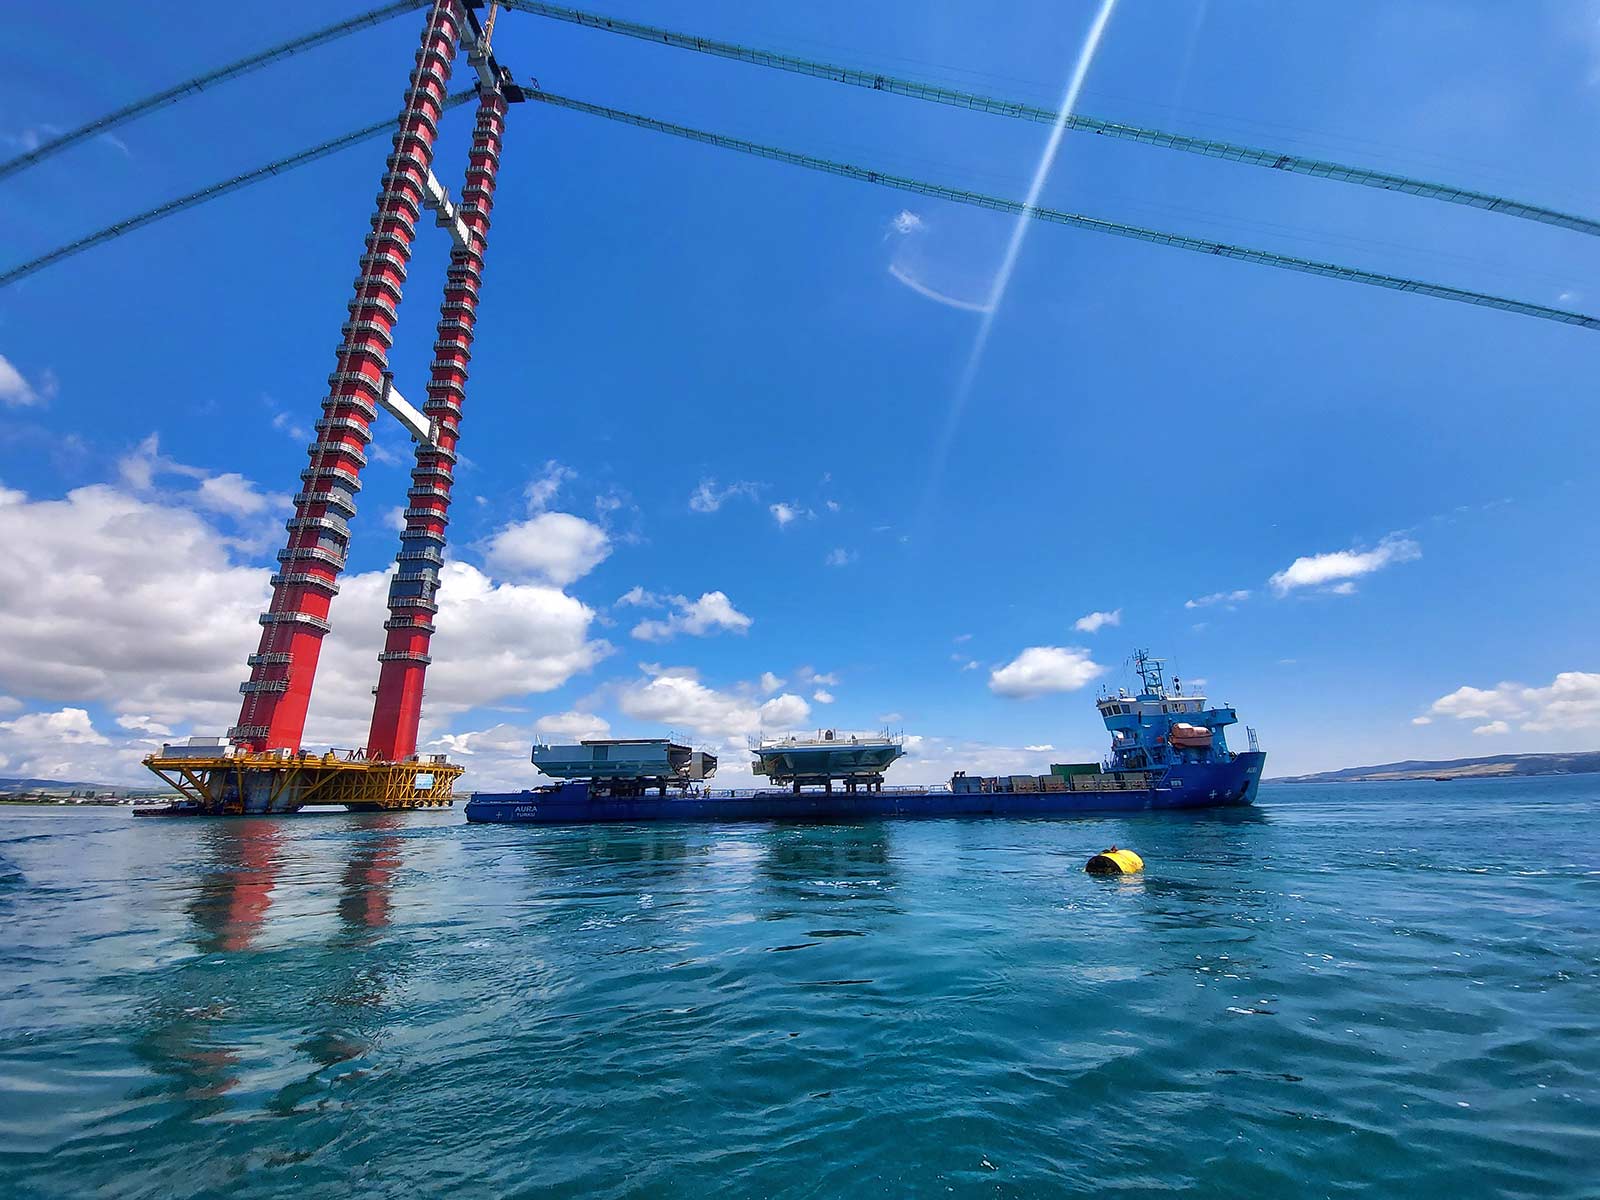 M/V Aura involved in the building of the world’s longest suspension bridge in Turkey